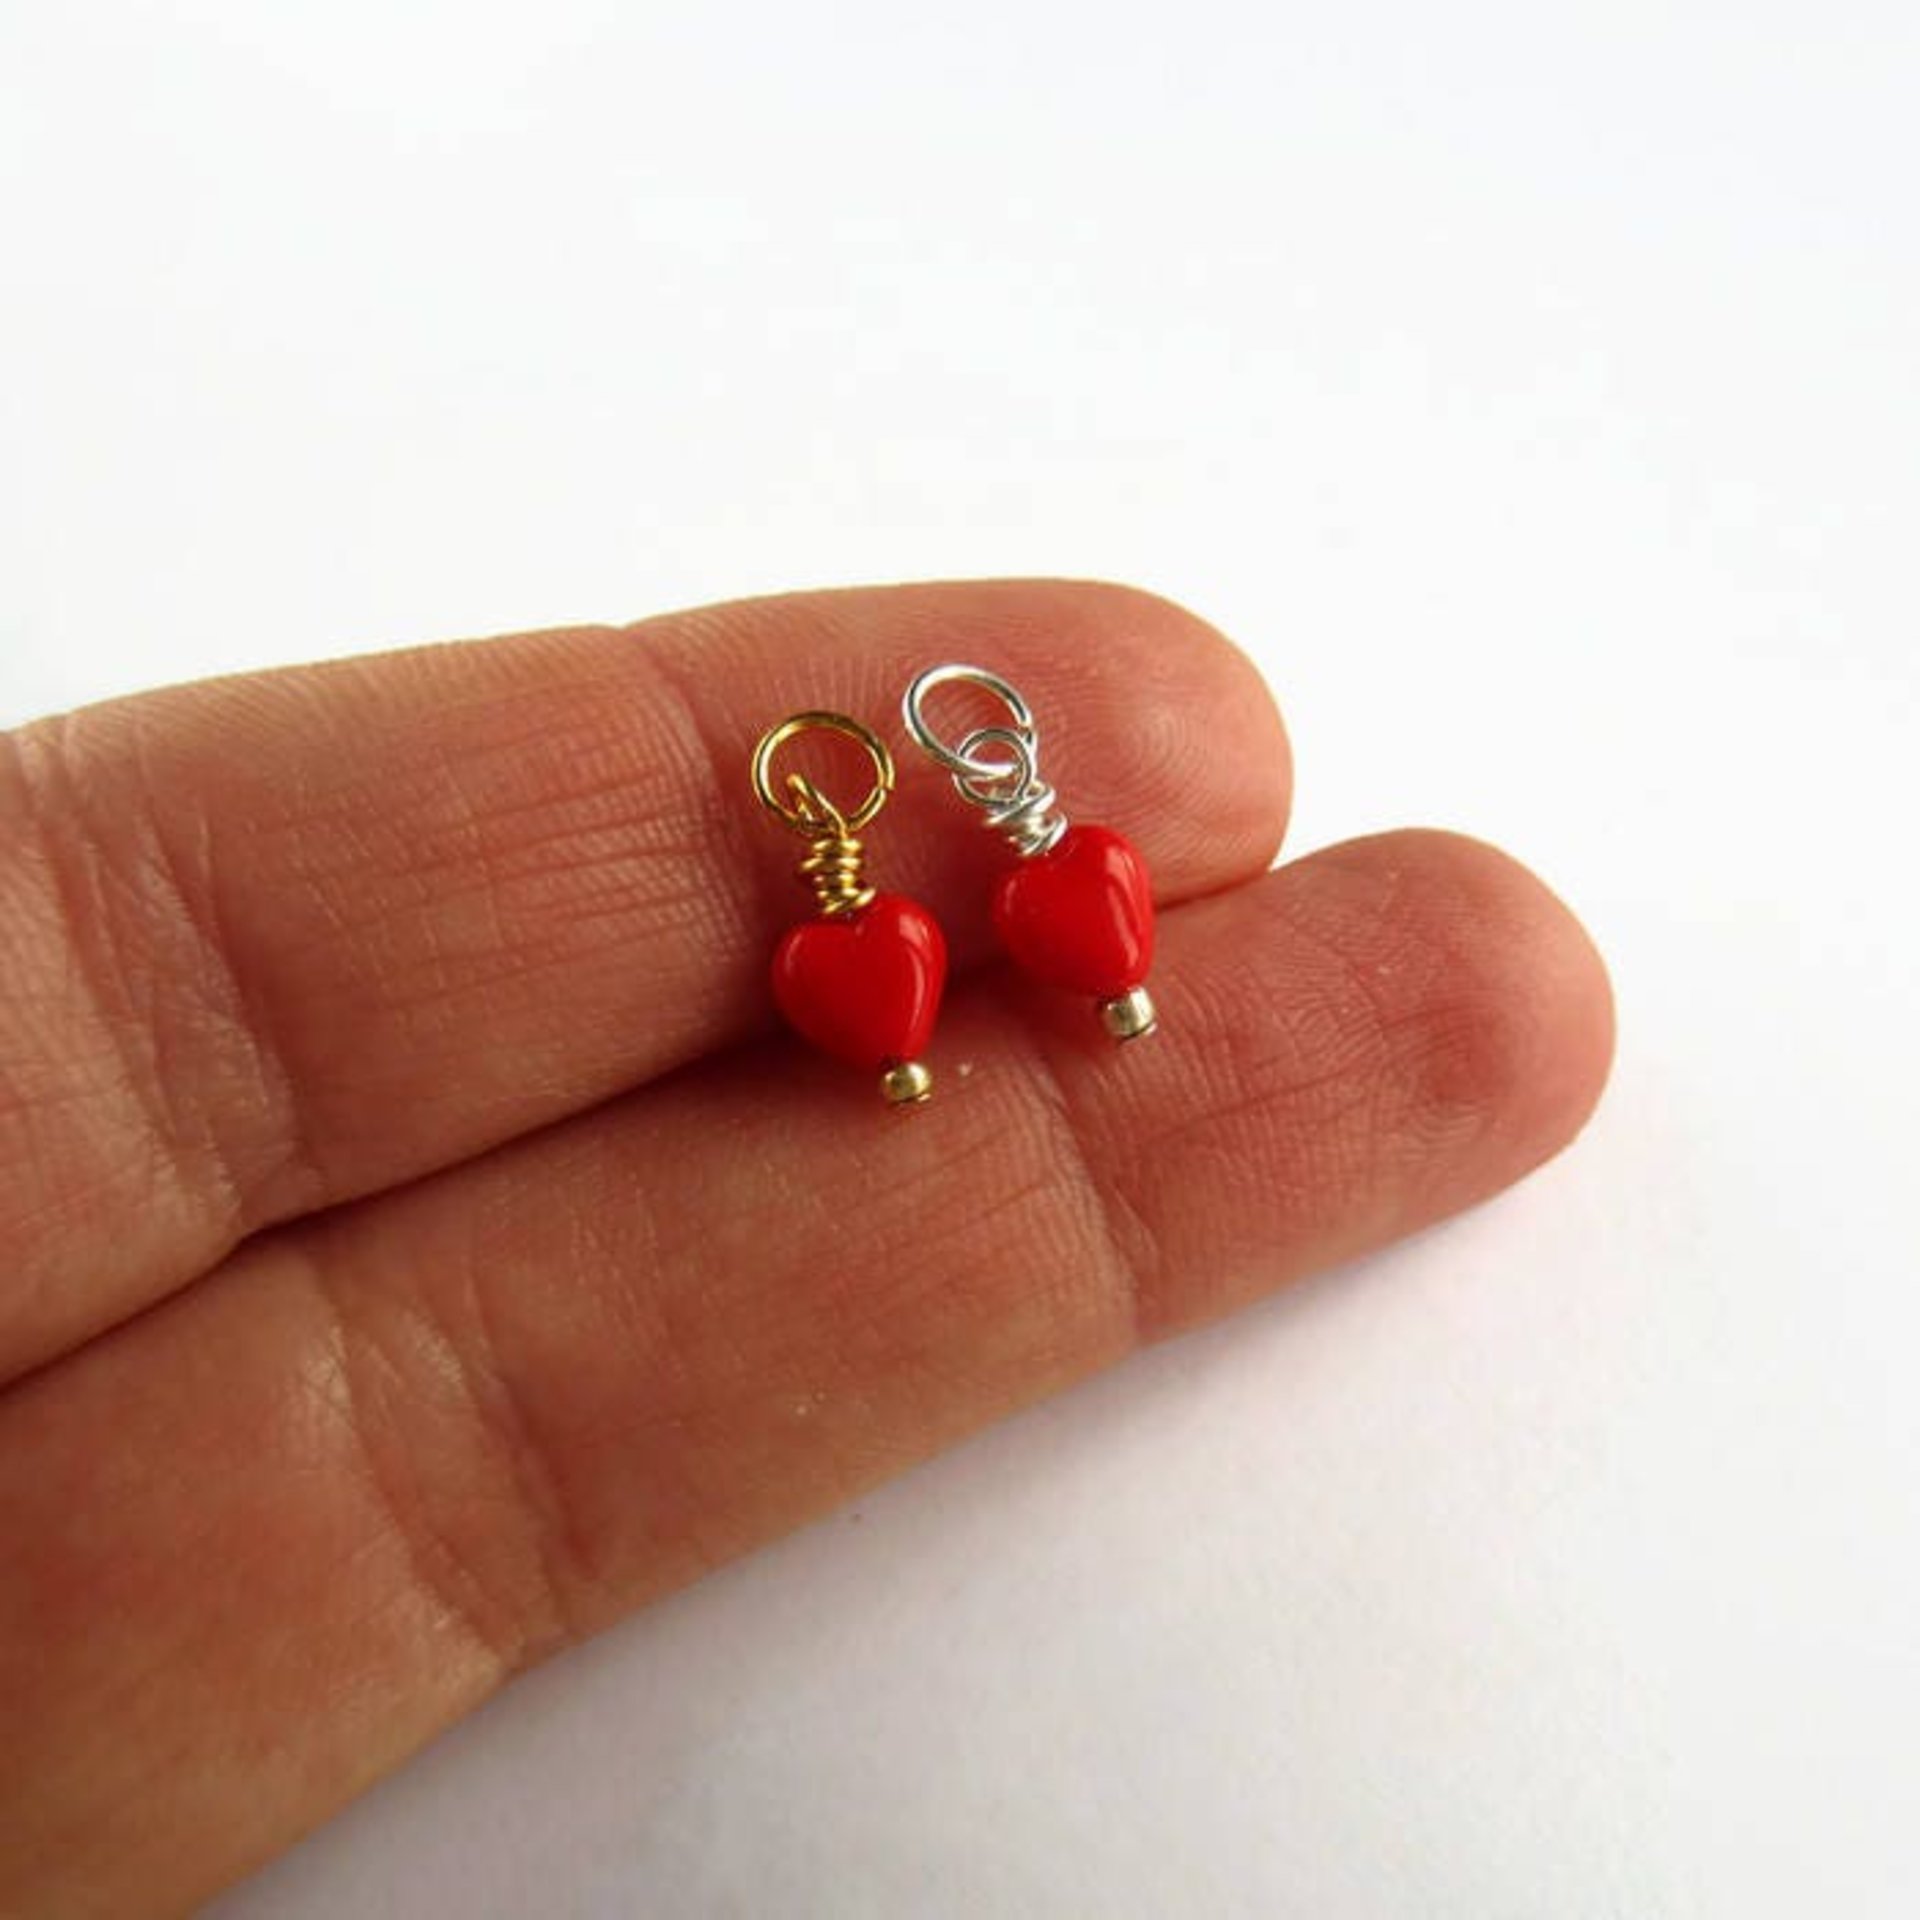 Tiny Red Czech Glass Heart Charm ~ Handmade by The Tiny Tree Frog Jewellery